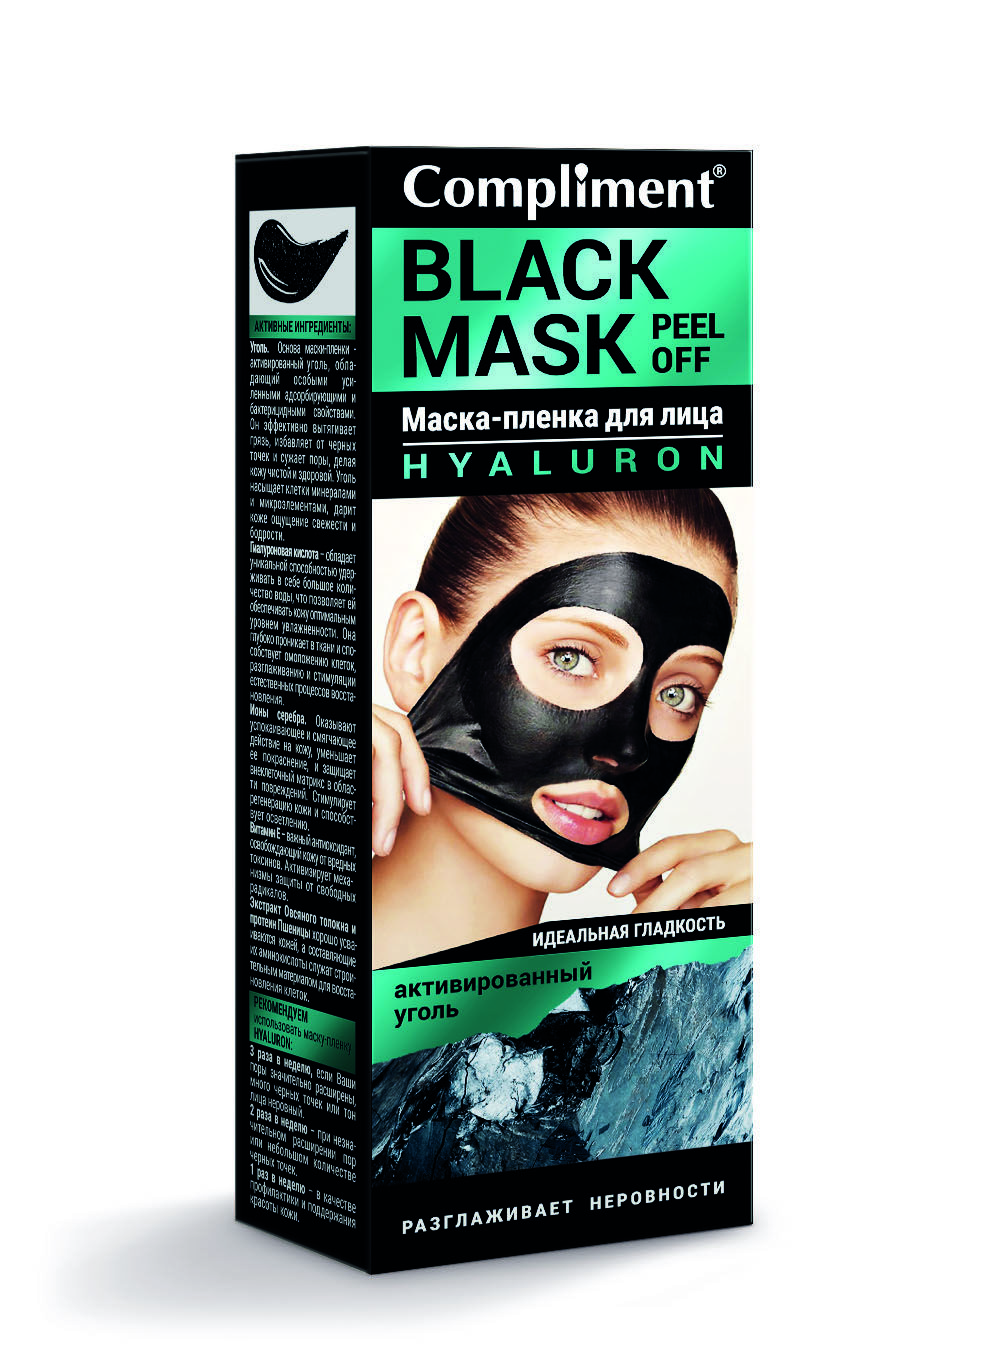 Compliment Black Mask маска-пленка для лица Pro-Collagen 80мл 80 мл. Compliment Black Mask маска-пленка для лица Pro-Collagen 80мл. Compliment Black Mask маска-пленка для лица коллаген, 80 мл. Compliment Black Mask маска-пленка для лица co-Enzymes 80мл.